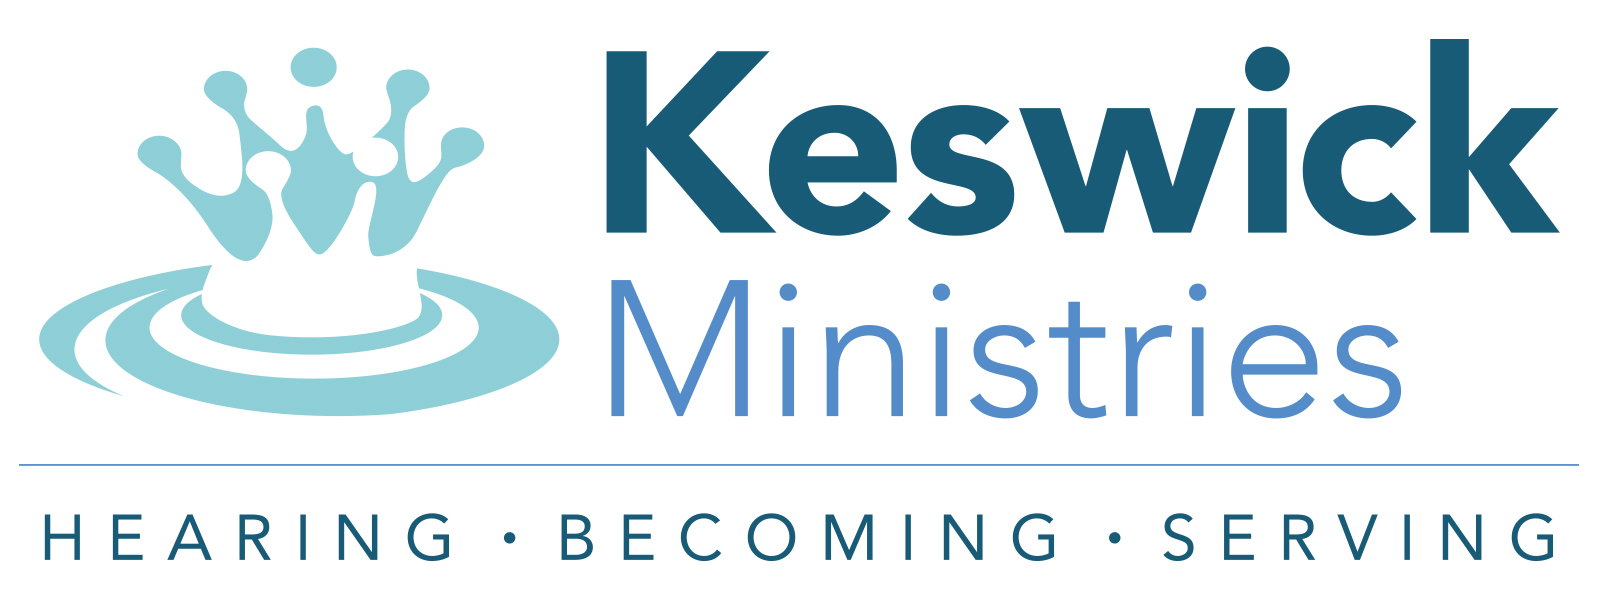 Keswick Ministries Logo.jpg